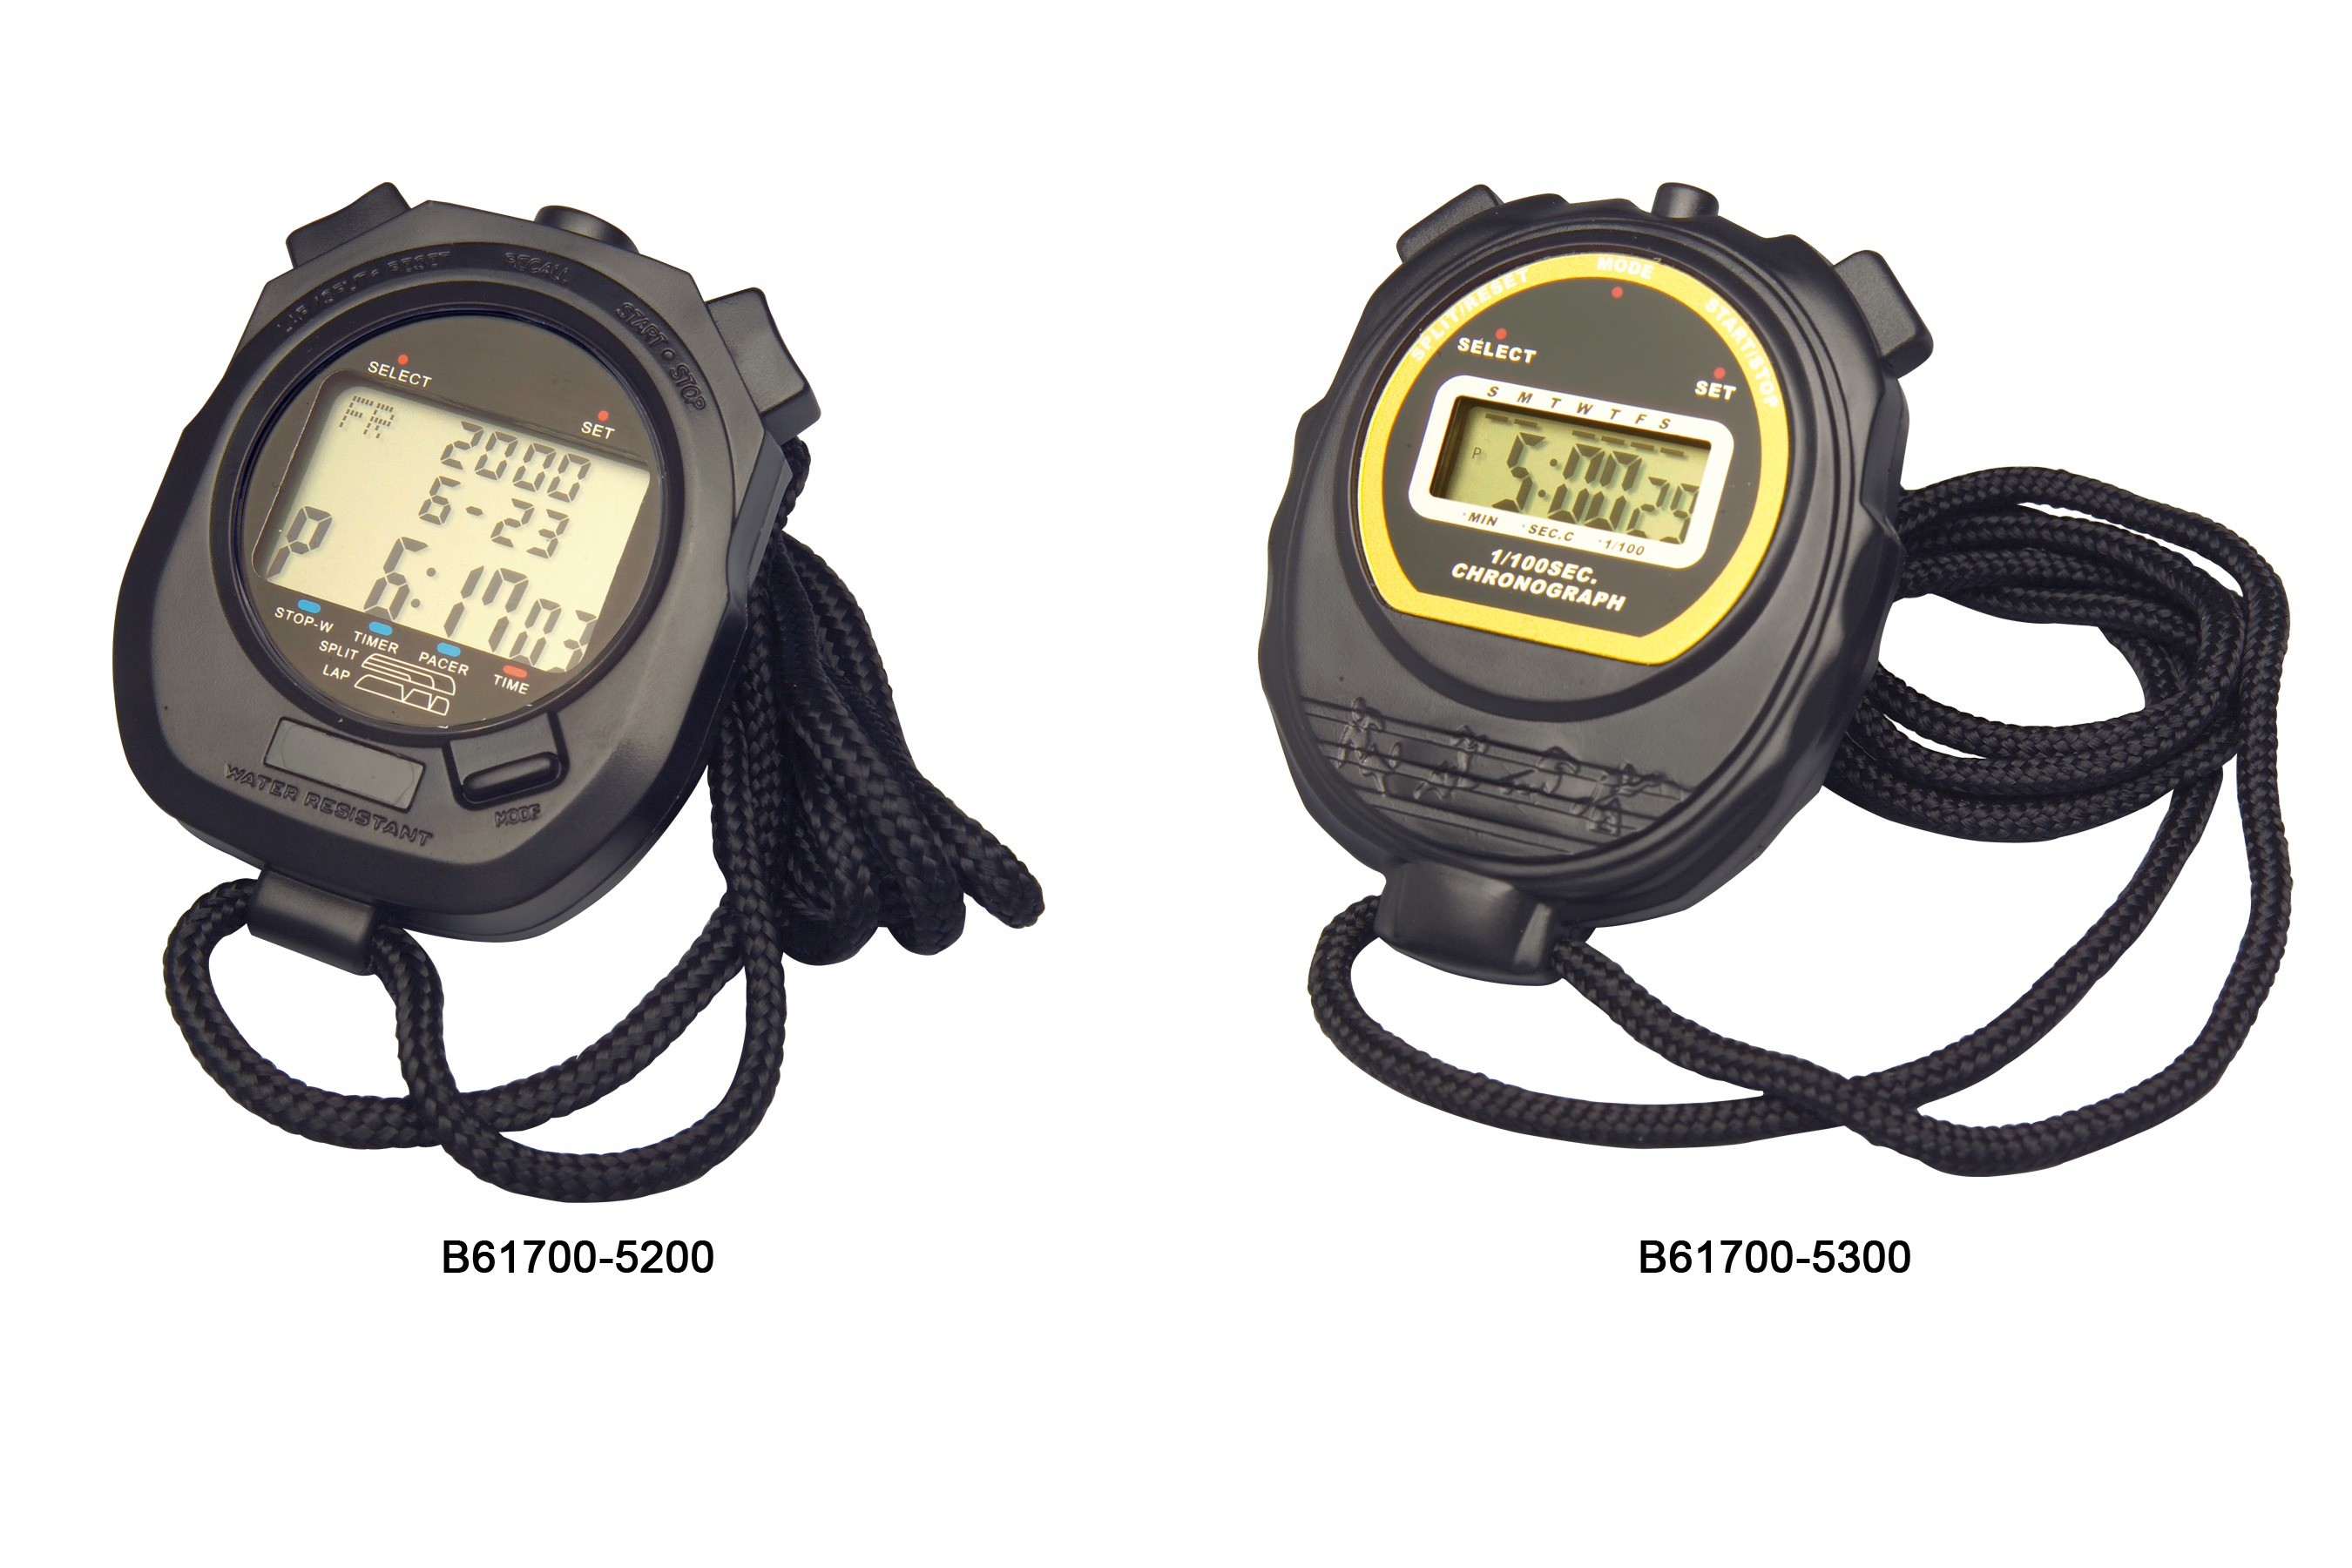 H-B DURAC Digital Stopwatches